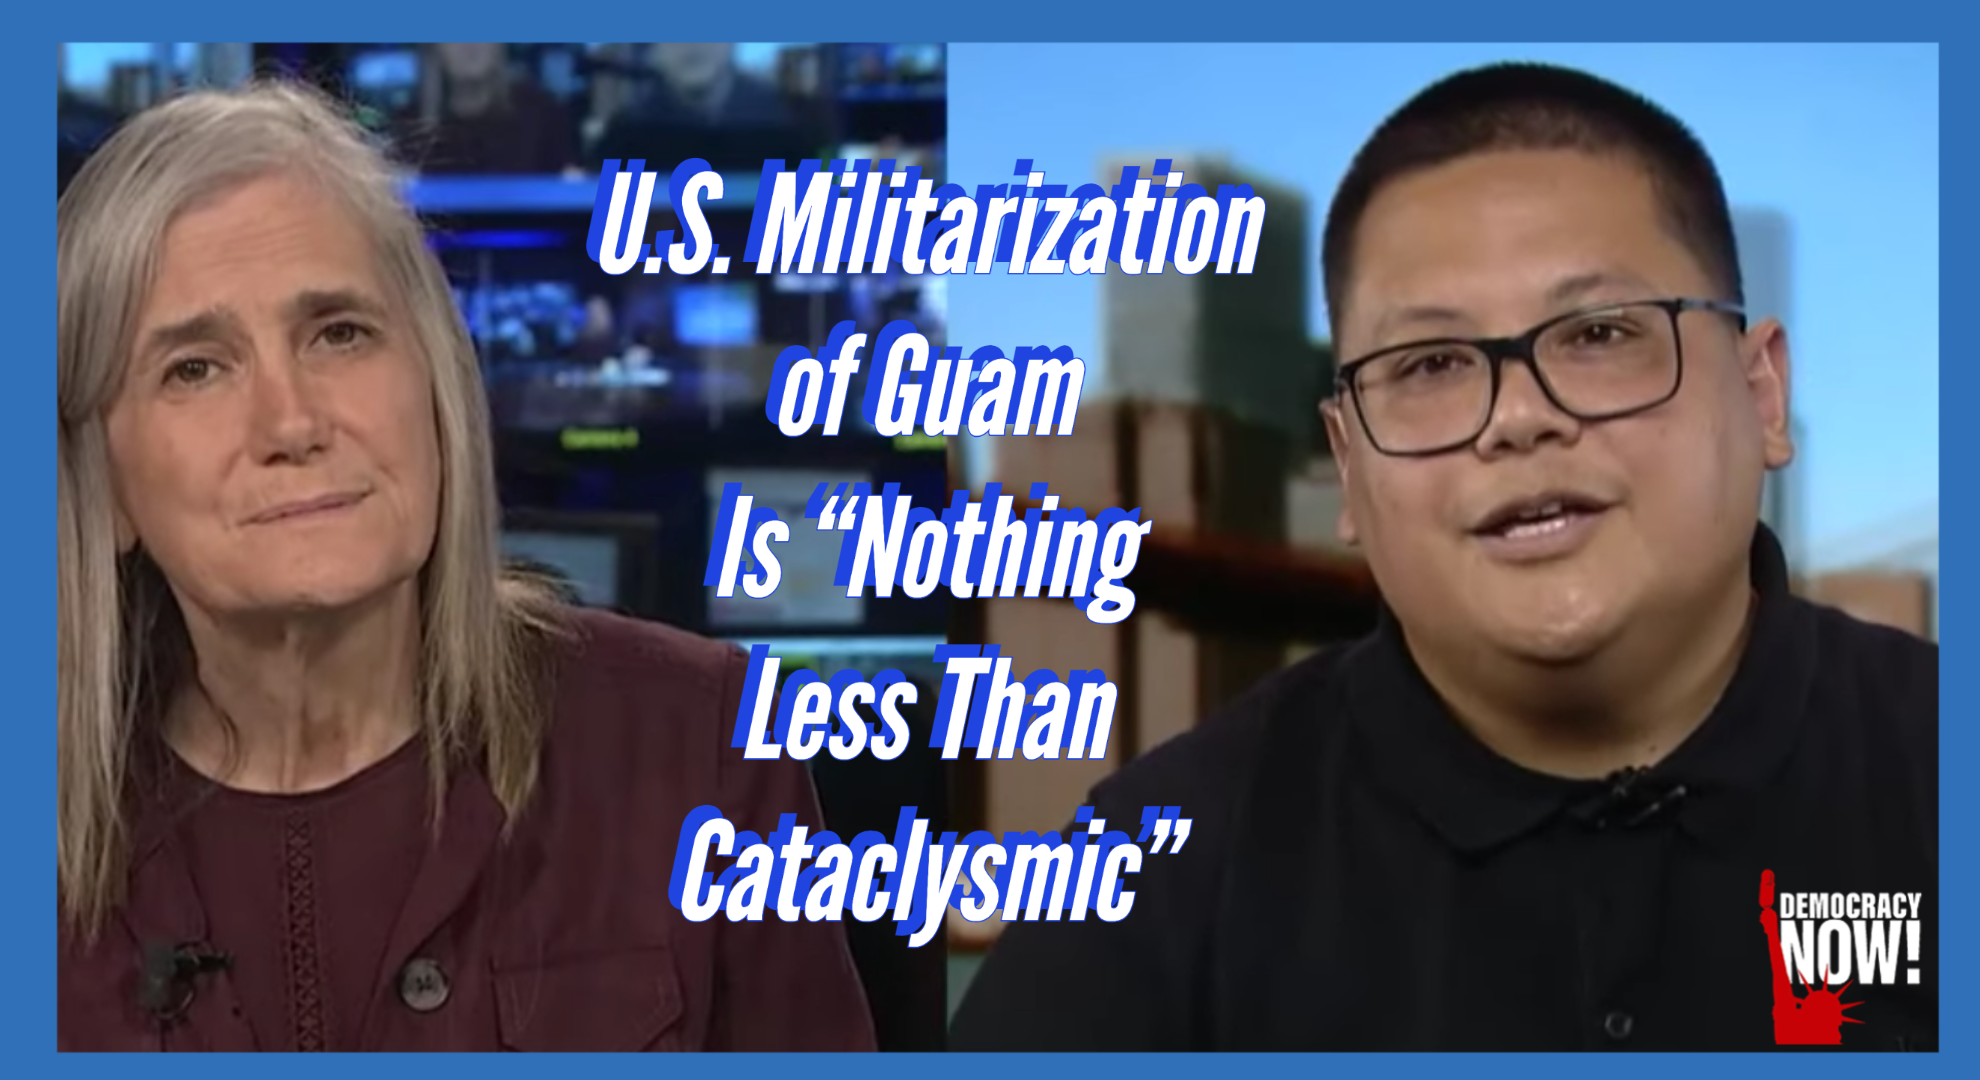 Julian Aguon: U.S. Militarization of Guam Is "Nothing Less Than Cataclysmic"